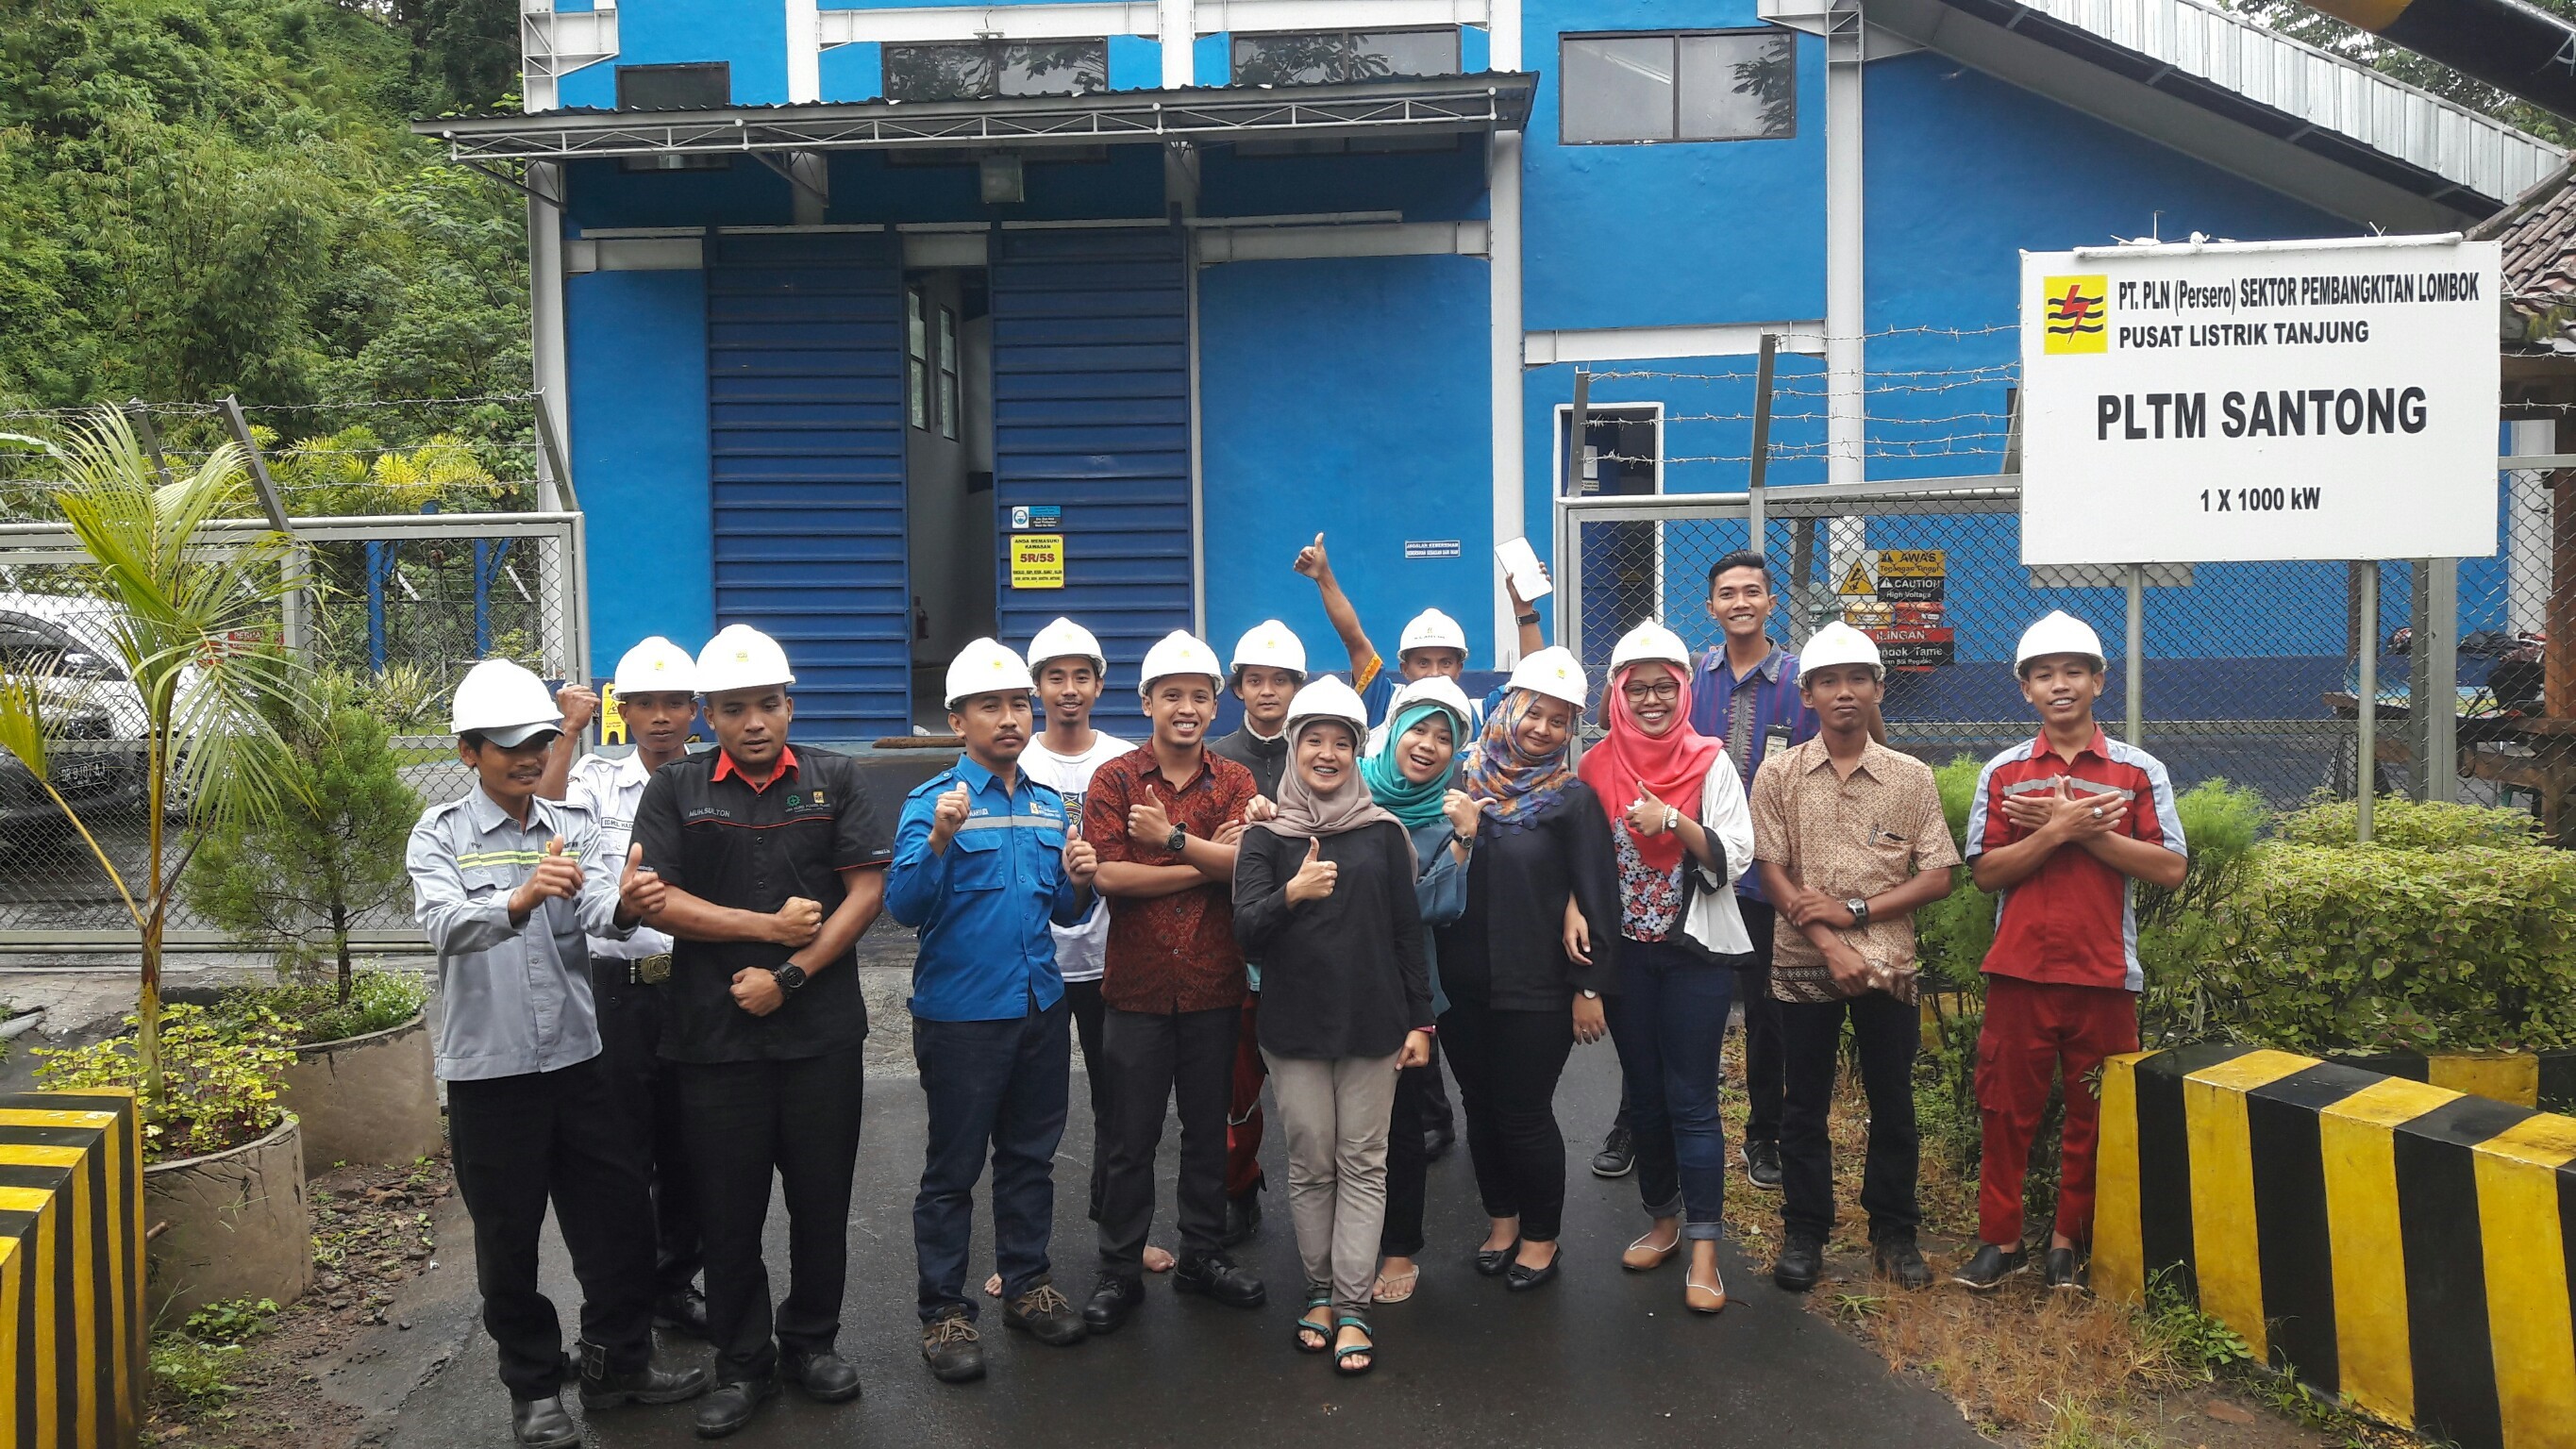 Team Synergy bersama Staff PT PLN Sektor Pembangkit Lombok (PLTM Santong)